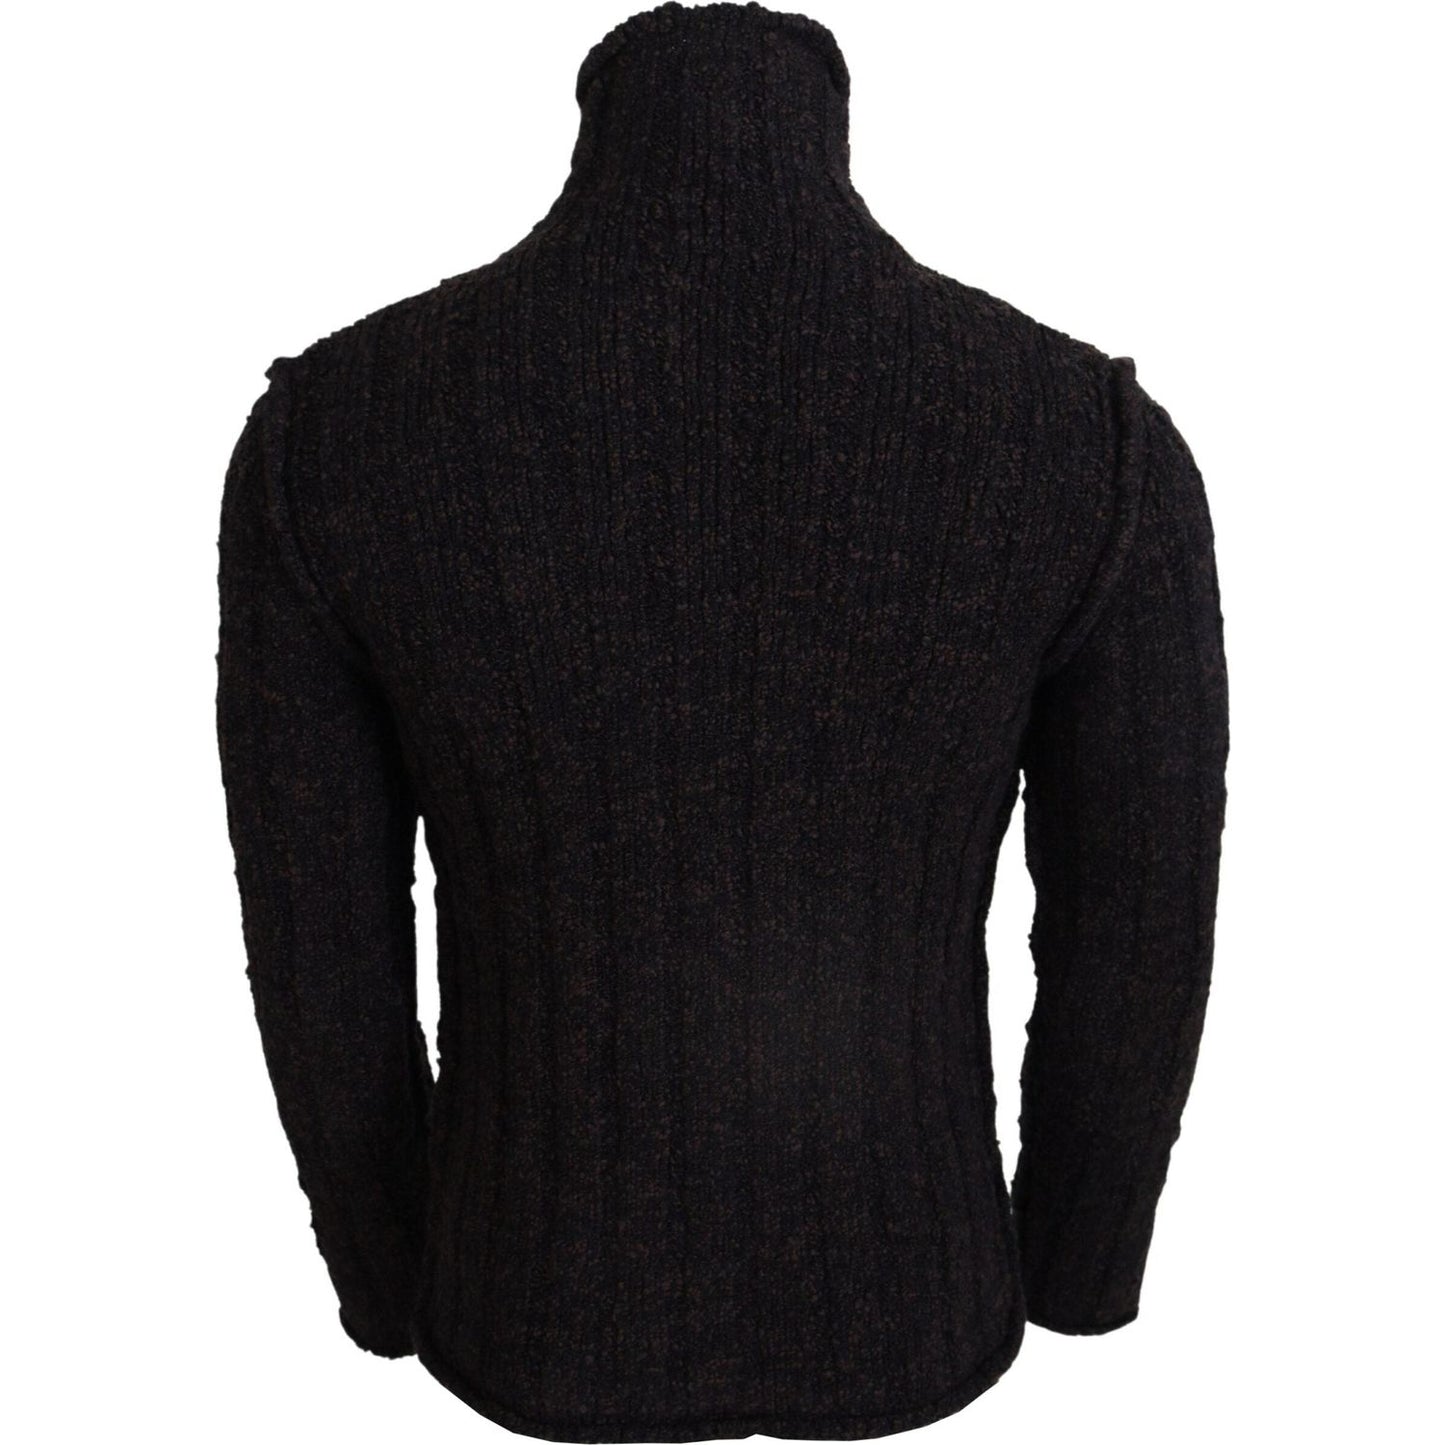 Dolce & Gabbana Elegant Turtleneck Wool-Blend Sweater brown-wool-knit-turtleneck-pullover-sweater IMG_6356-scaled-a49a1edd-681.jpg